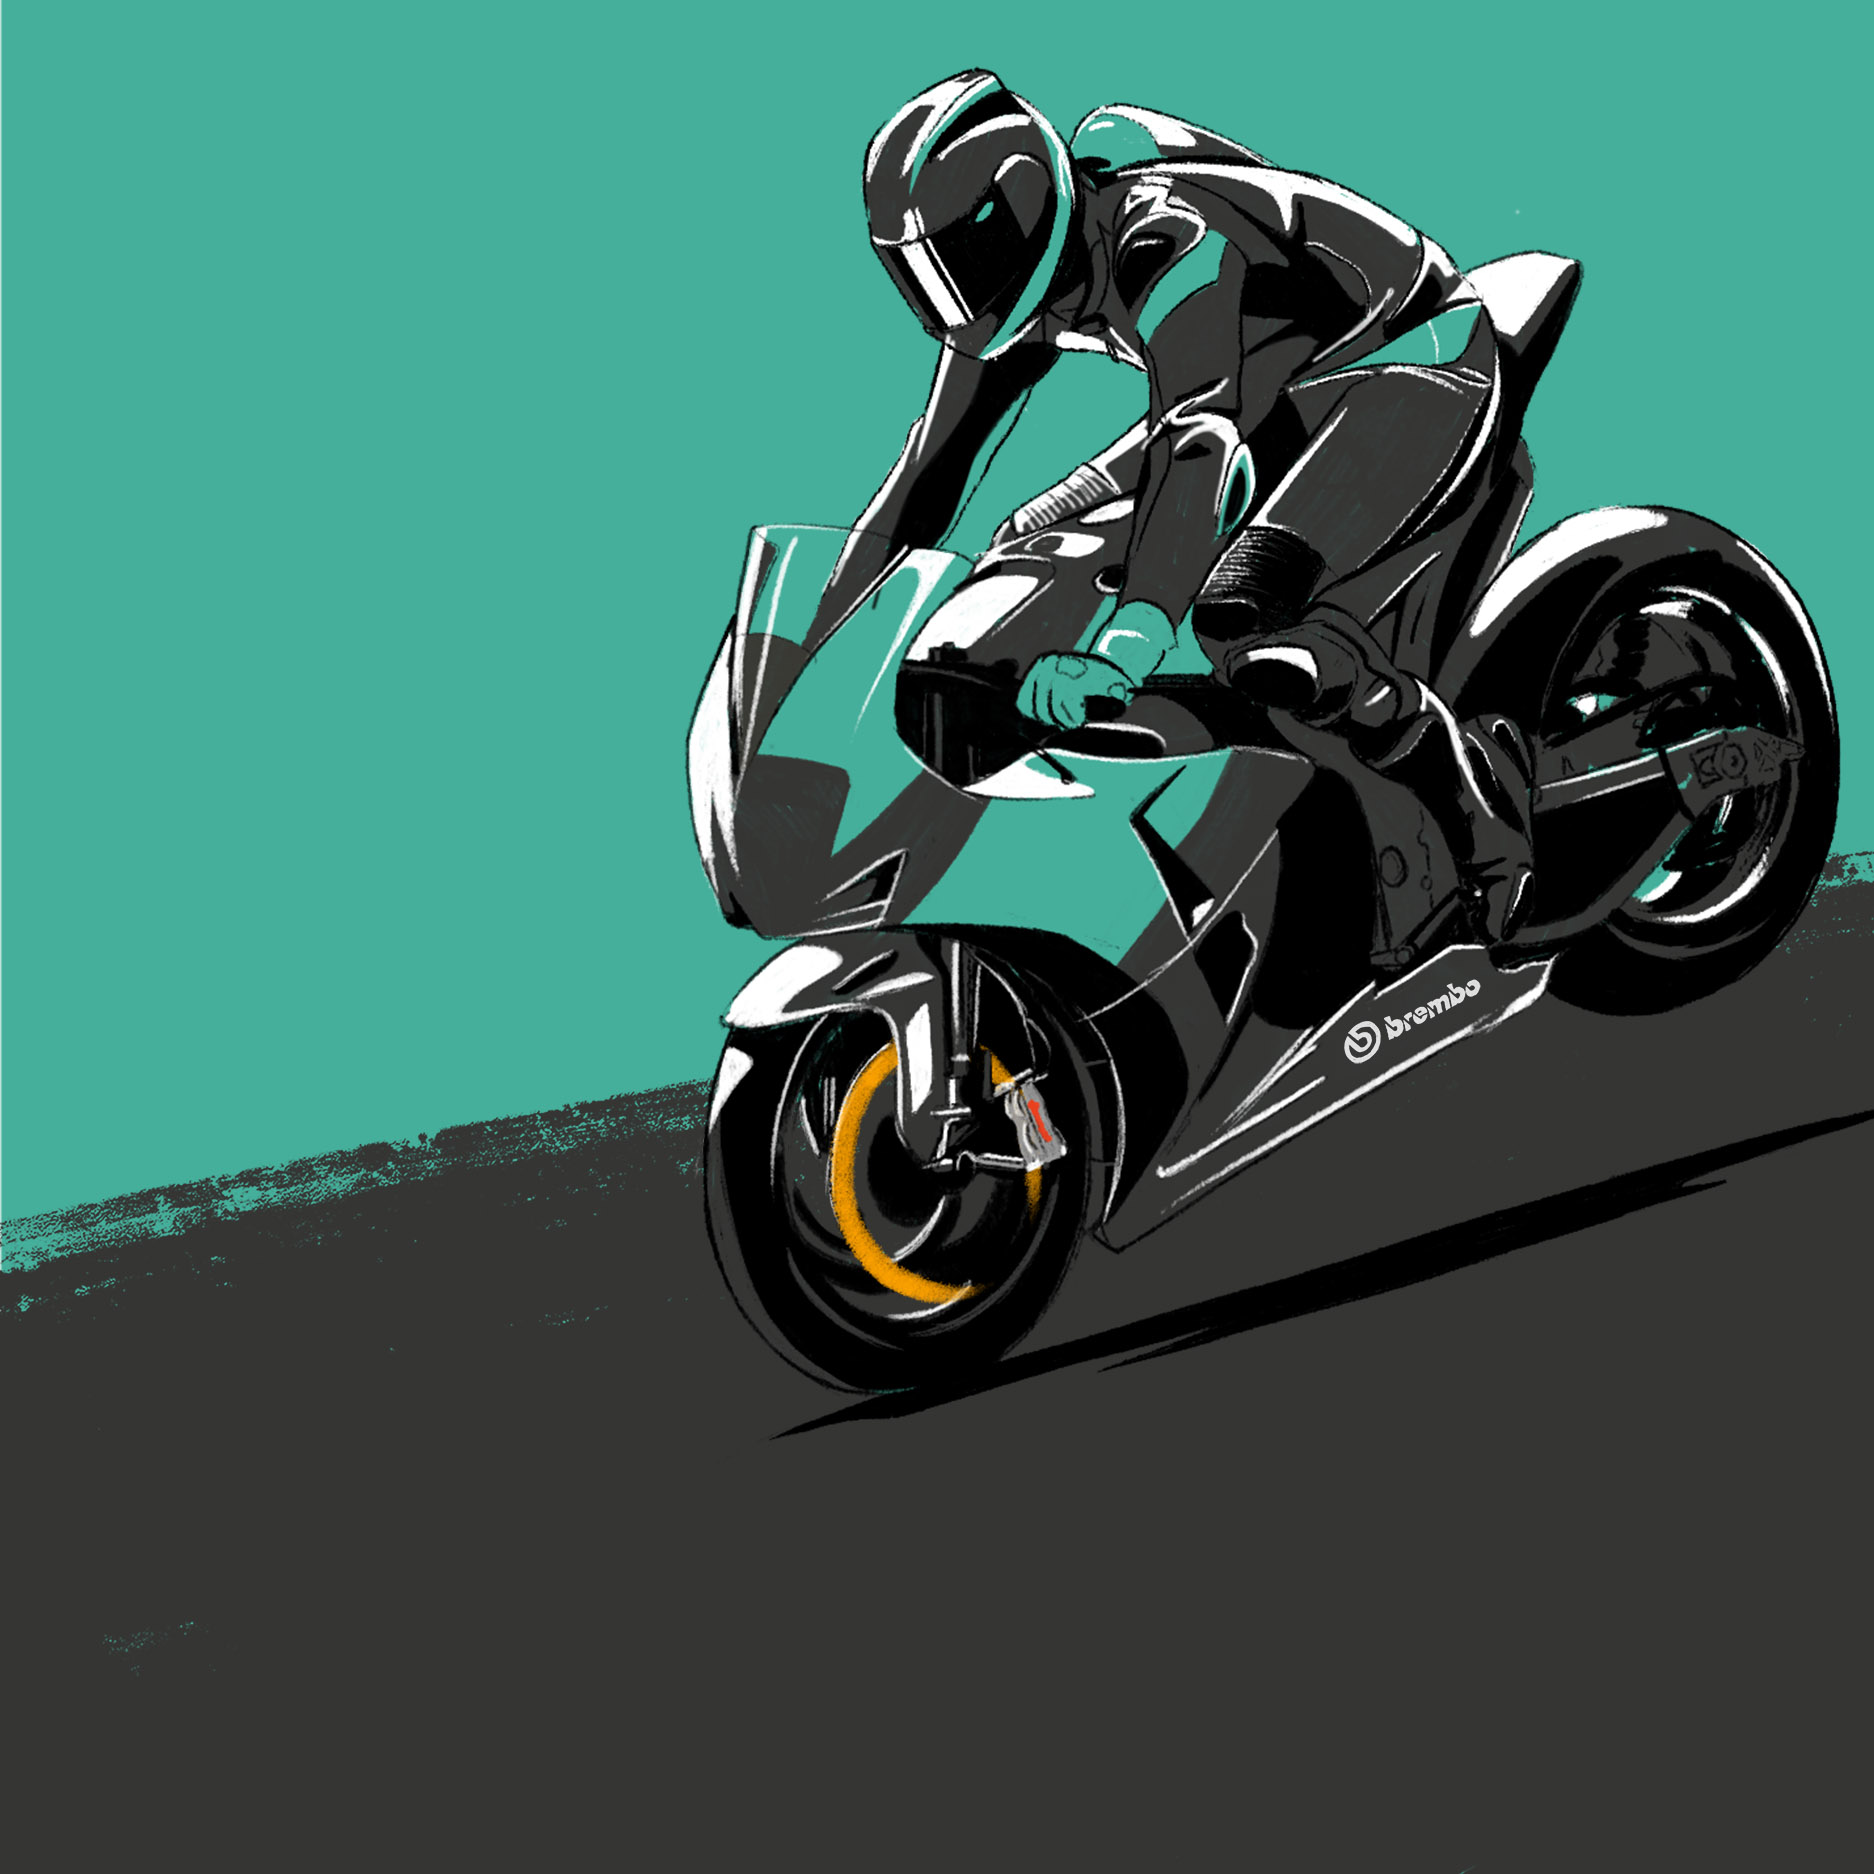 Brembo Racing Illustration Motorcycle Moto GP 1874x1874